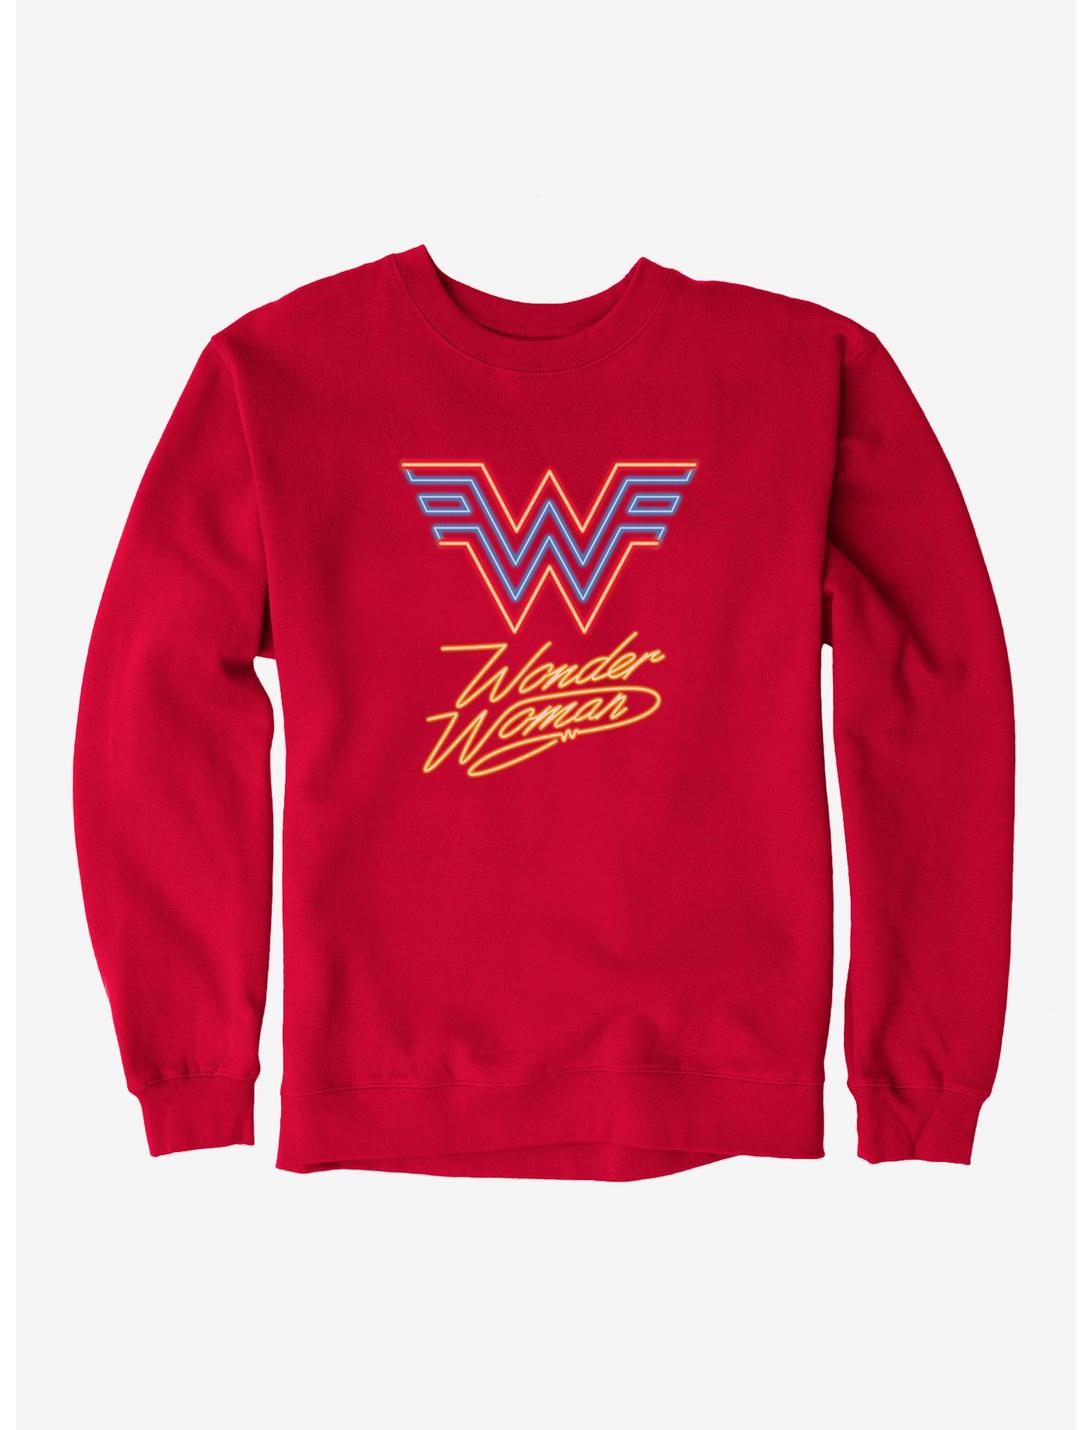 DC Comics Wonder Woman 1984 Neon Throwback Sweatshirt